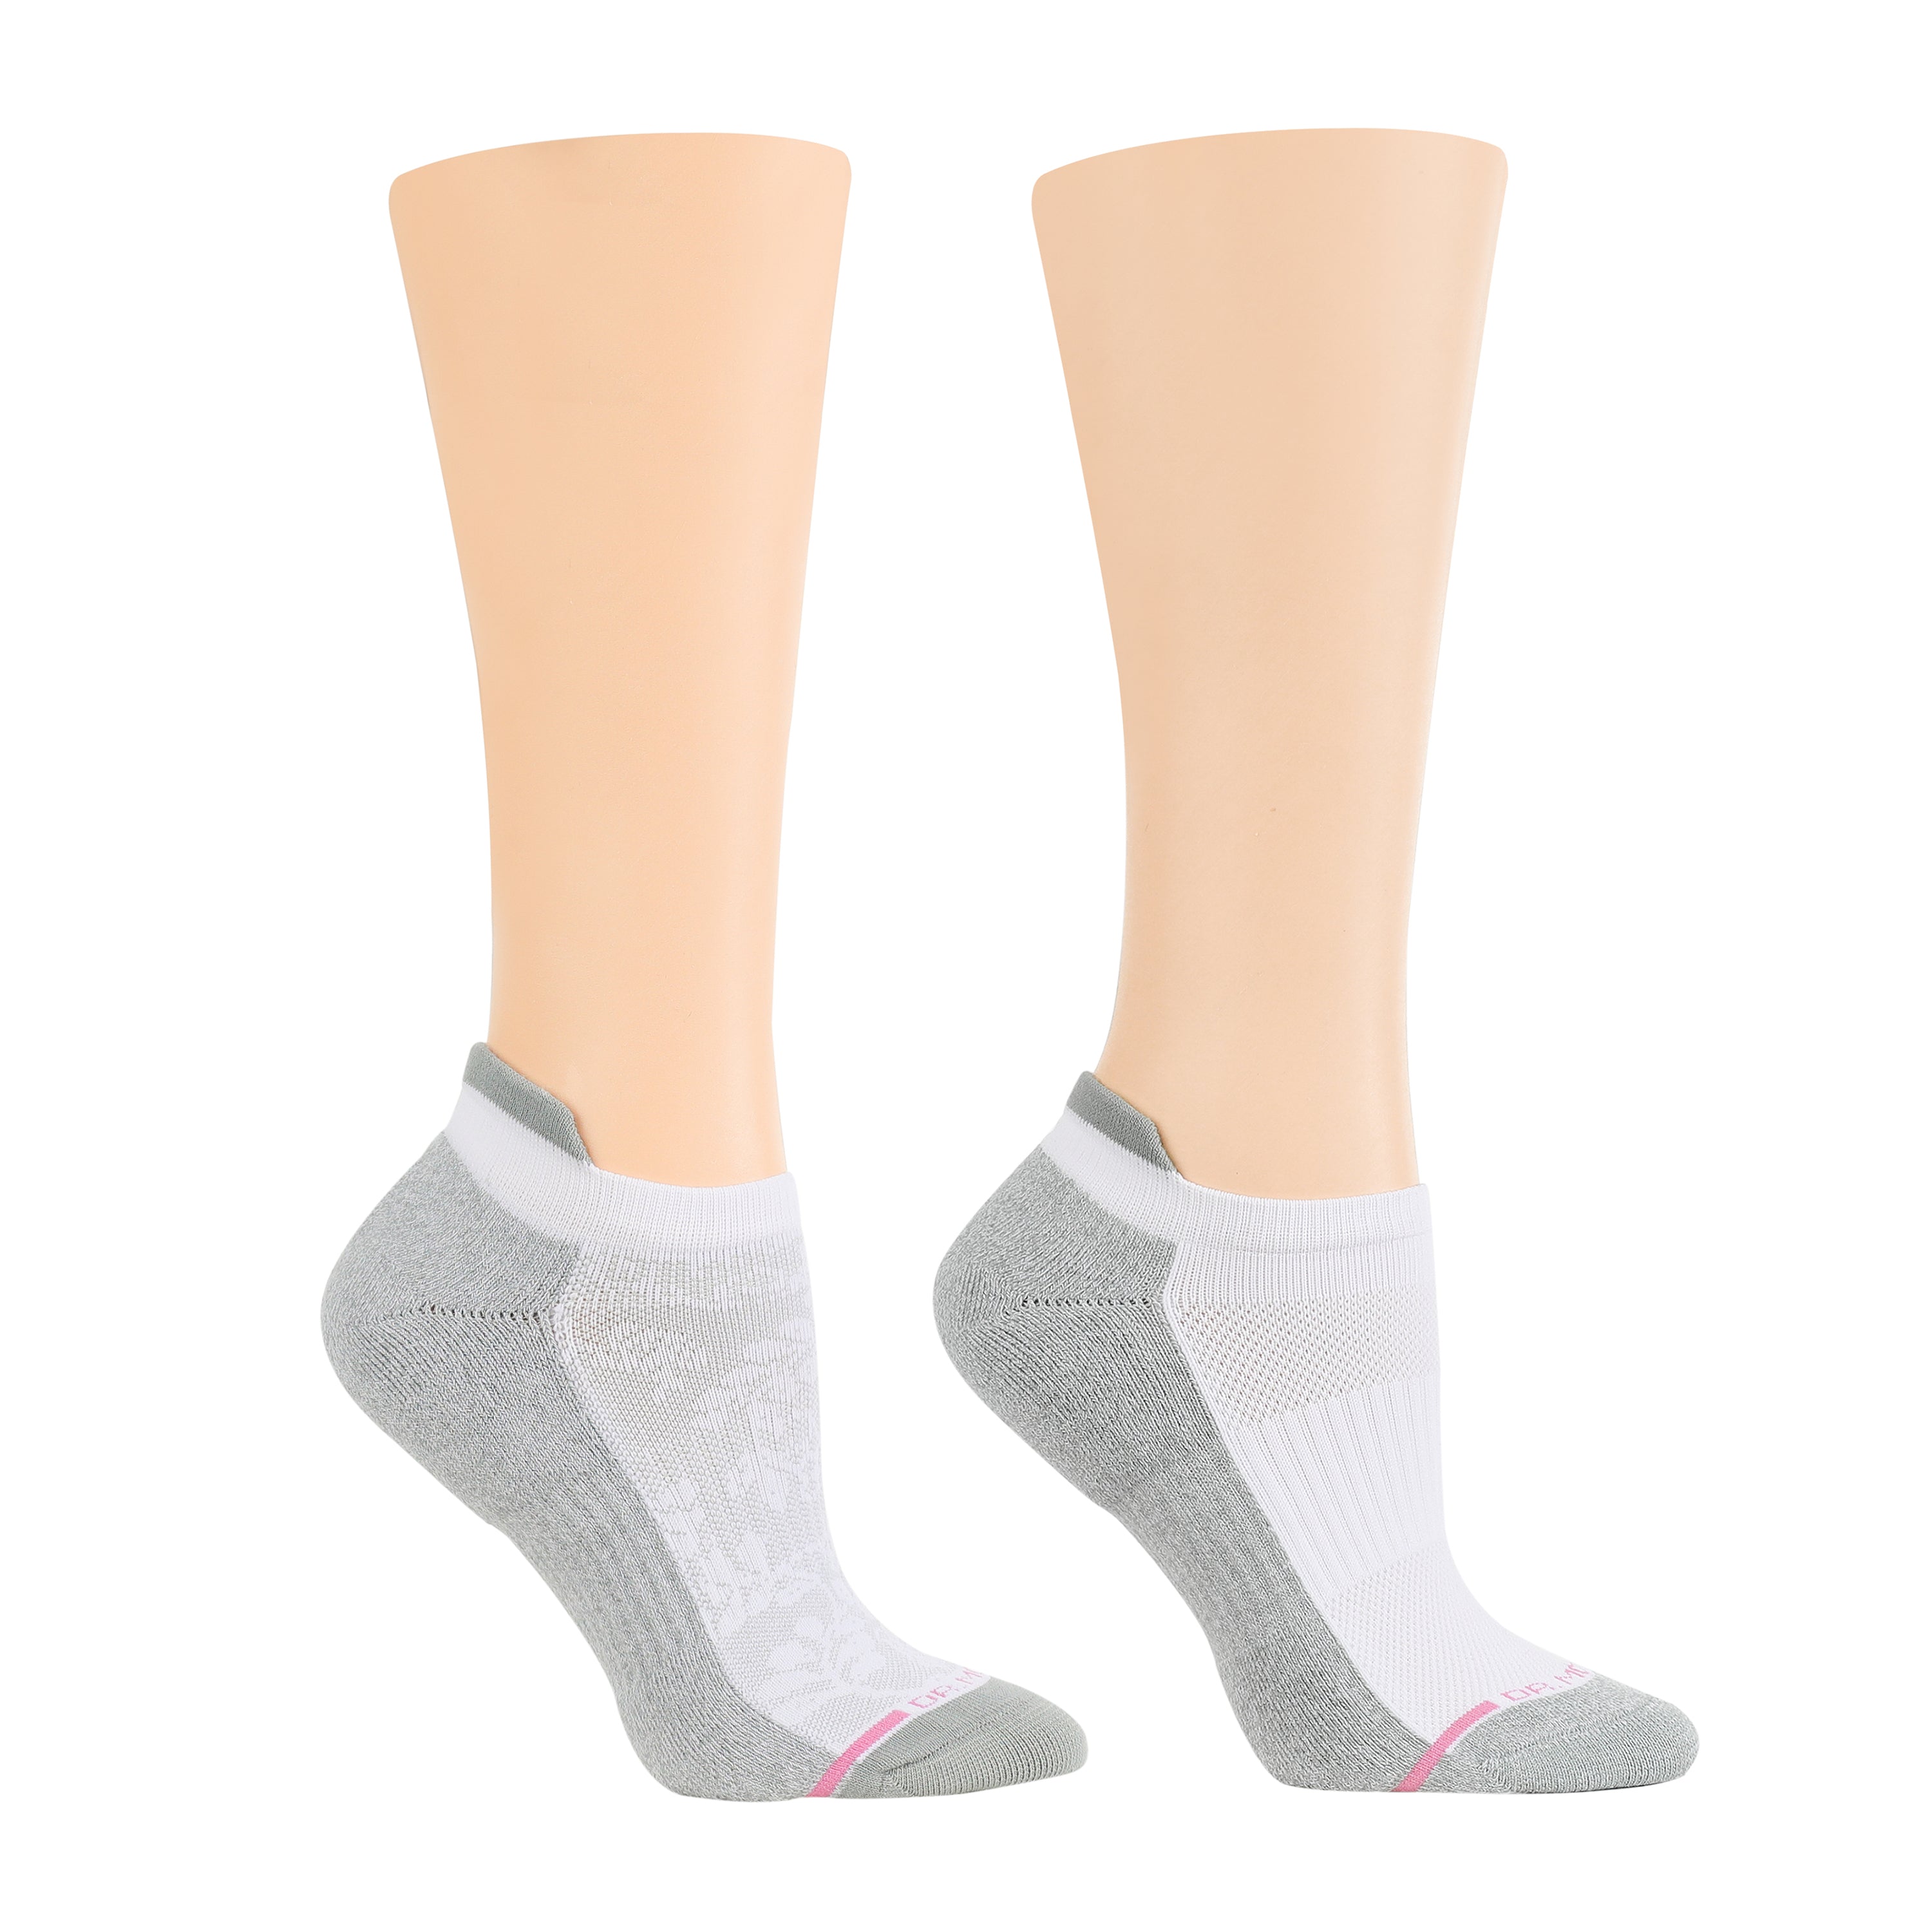 Printed Women Non Slip Yoga Socks for Girls and Women, Low Cut at